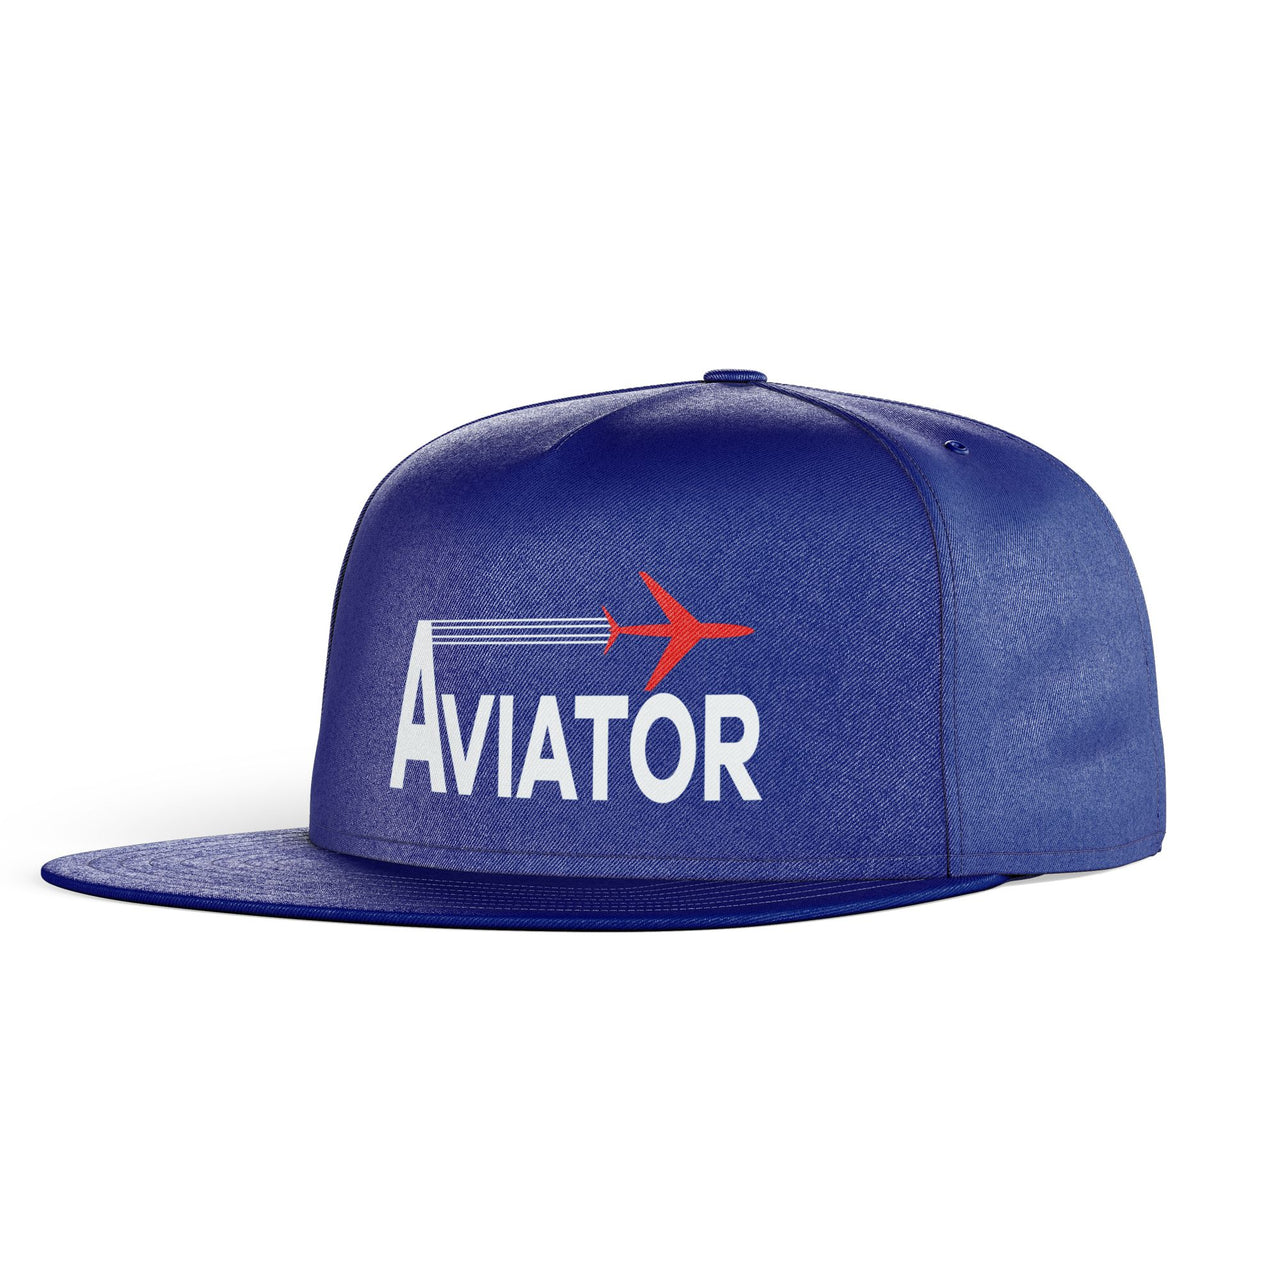 Aviator Designed Snapback Caps & Hats